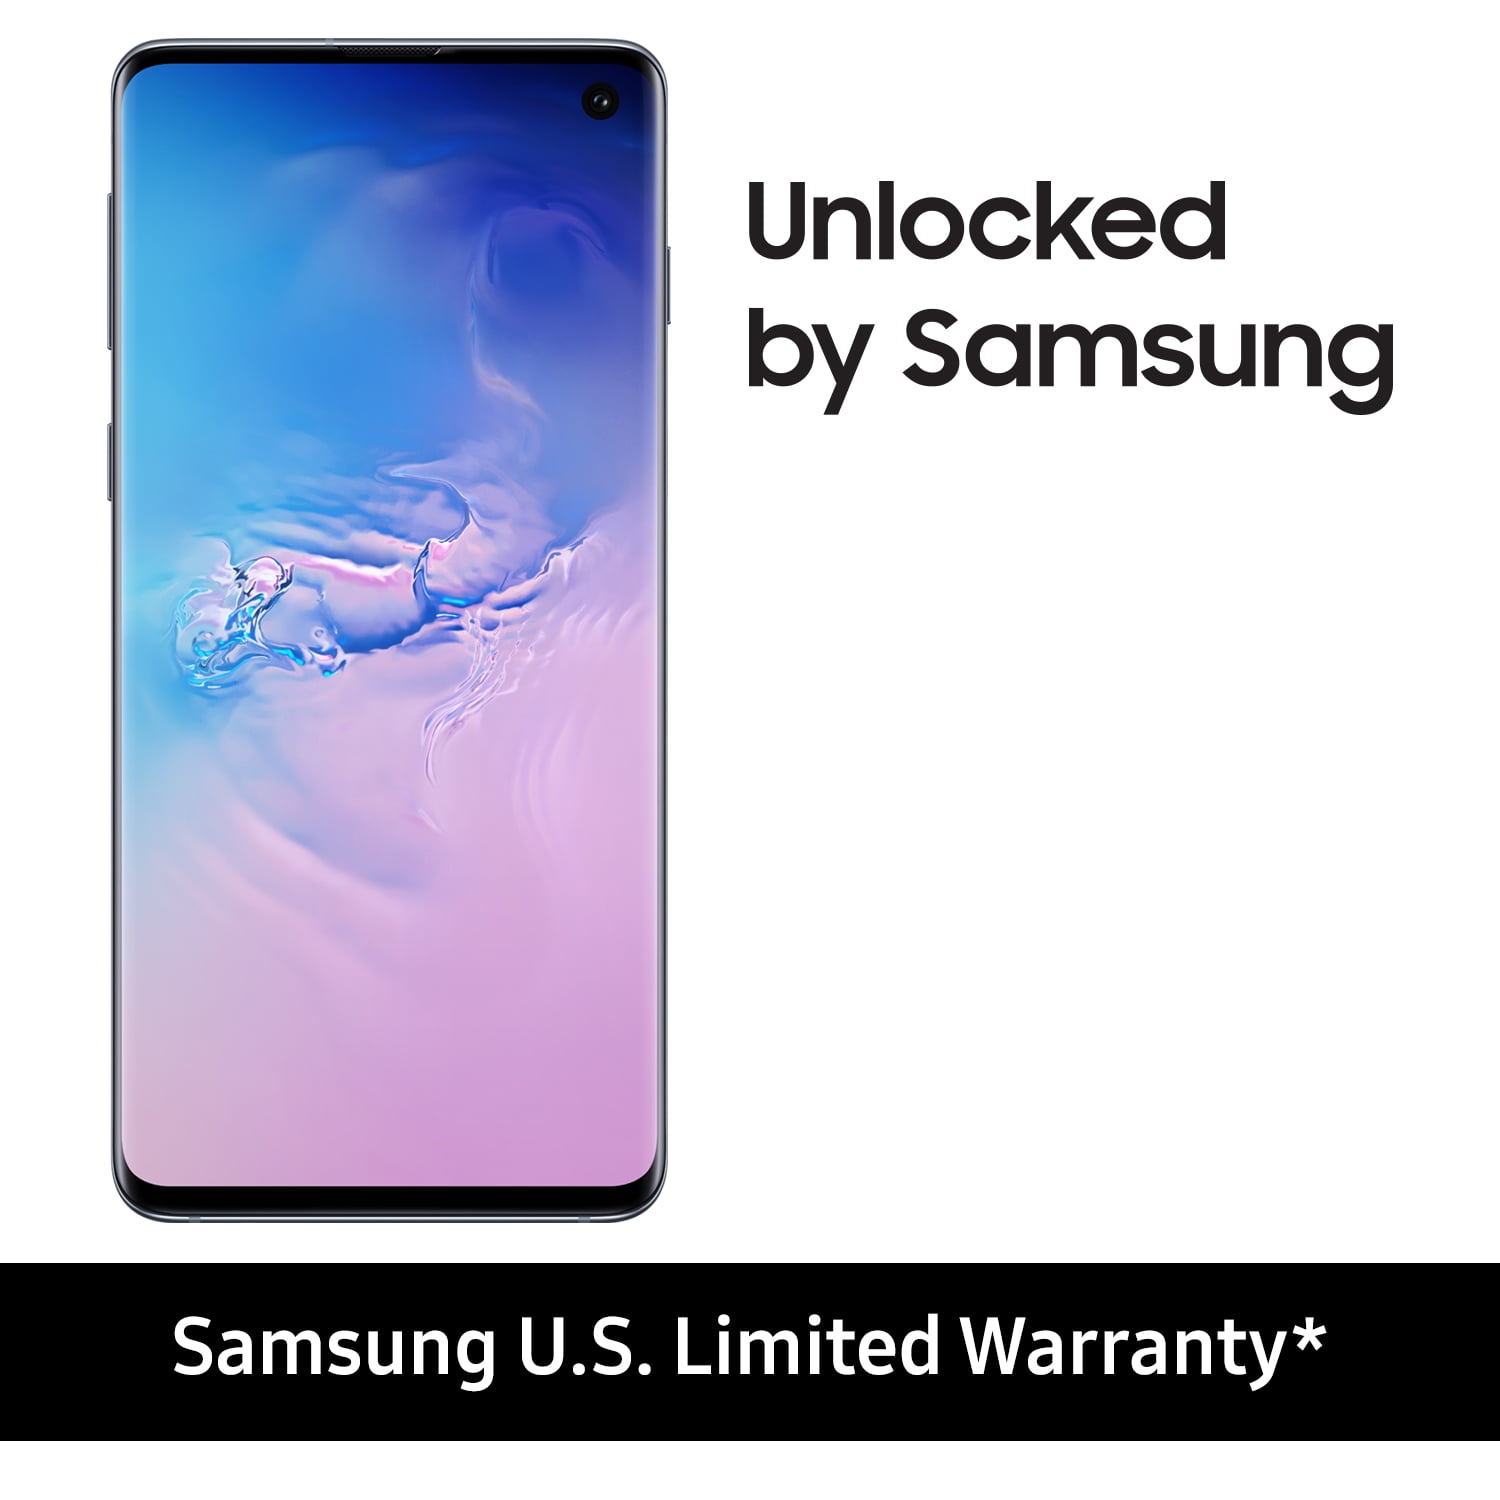 Samsung Galaxy S10+ Factory Unlocked with 128GB (U.S. Warranty), Prism Blue